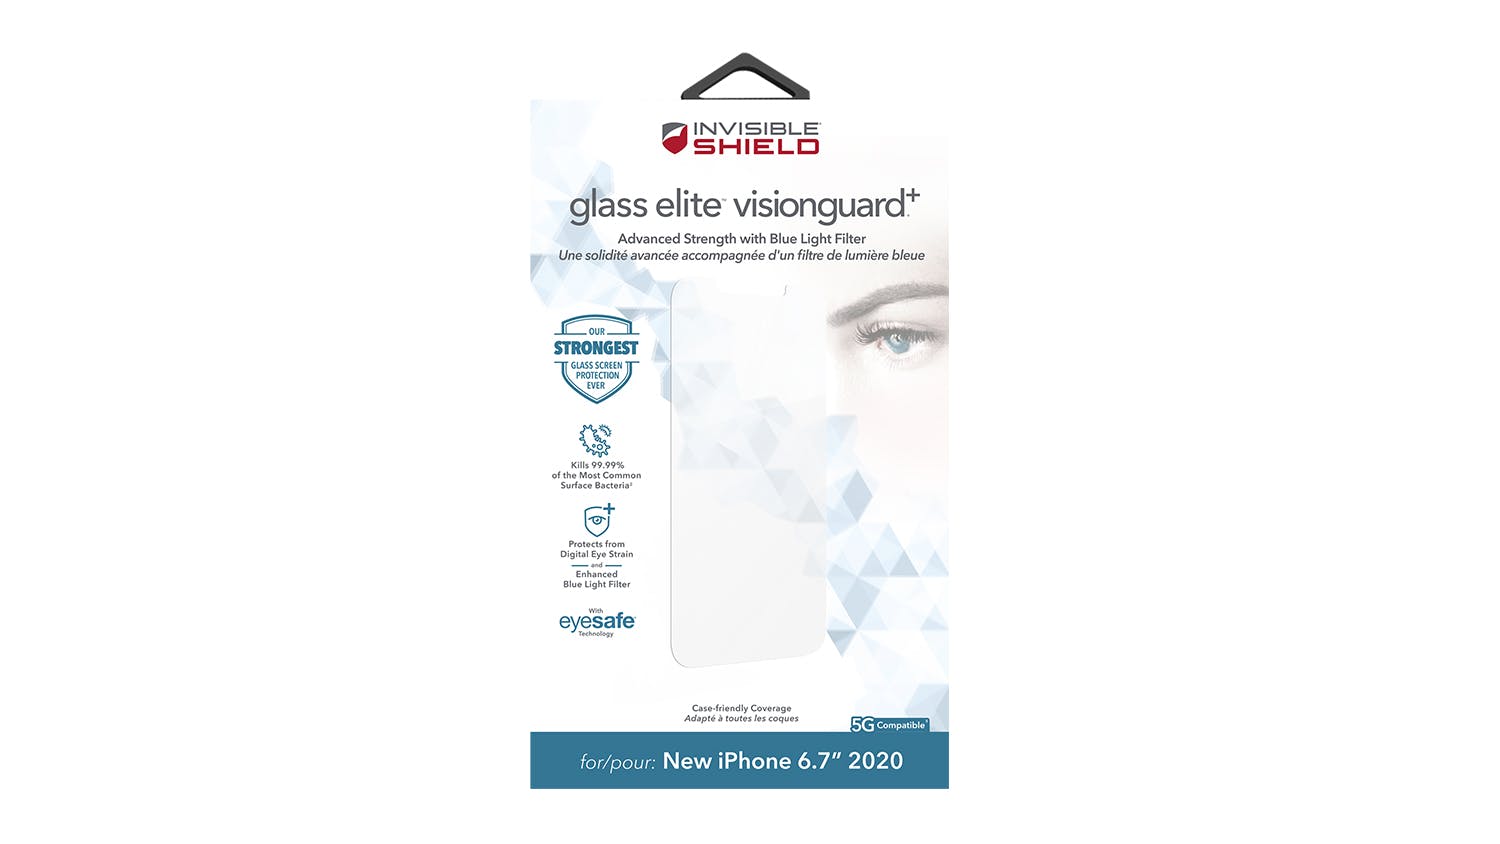 Zagg InvisibleShield Glass Elite Visionguard+ for iPhone 12 Pro Max